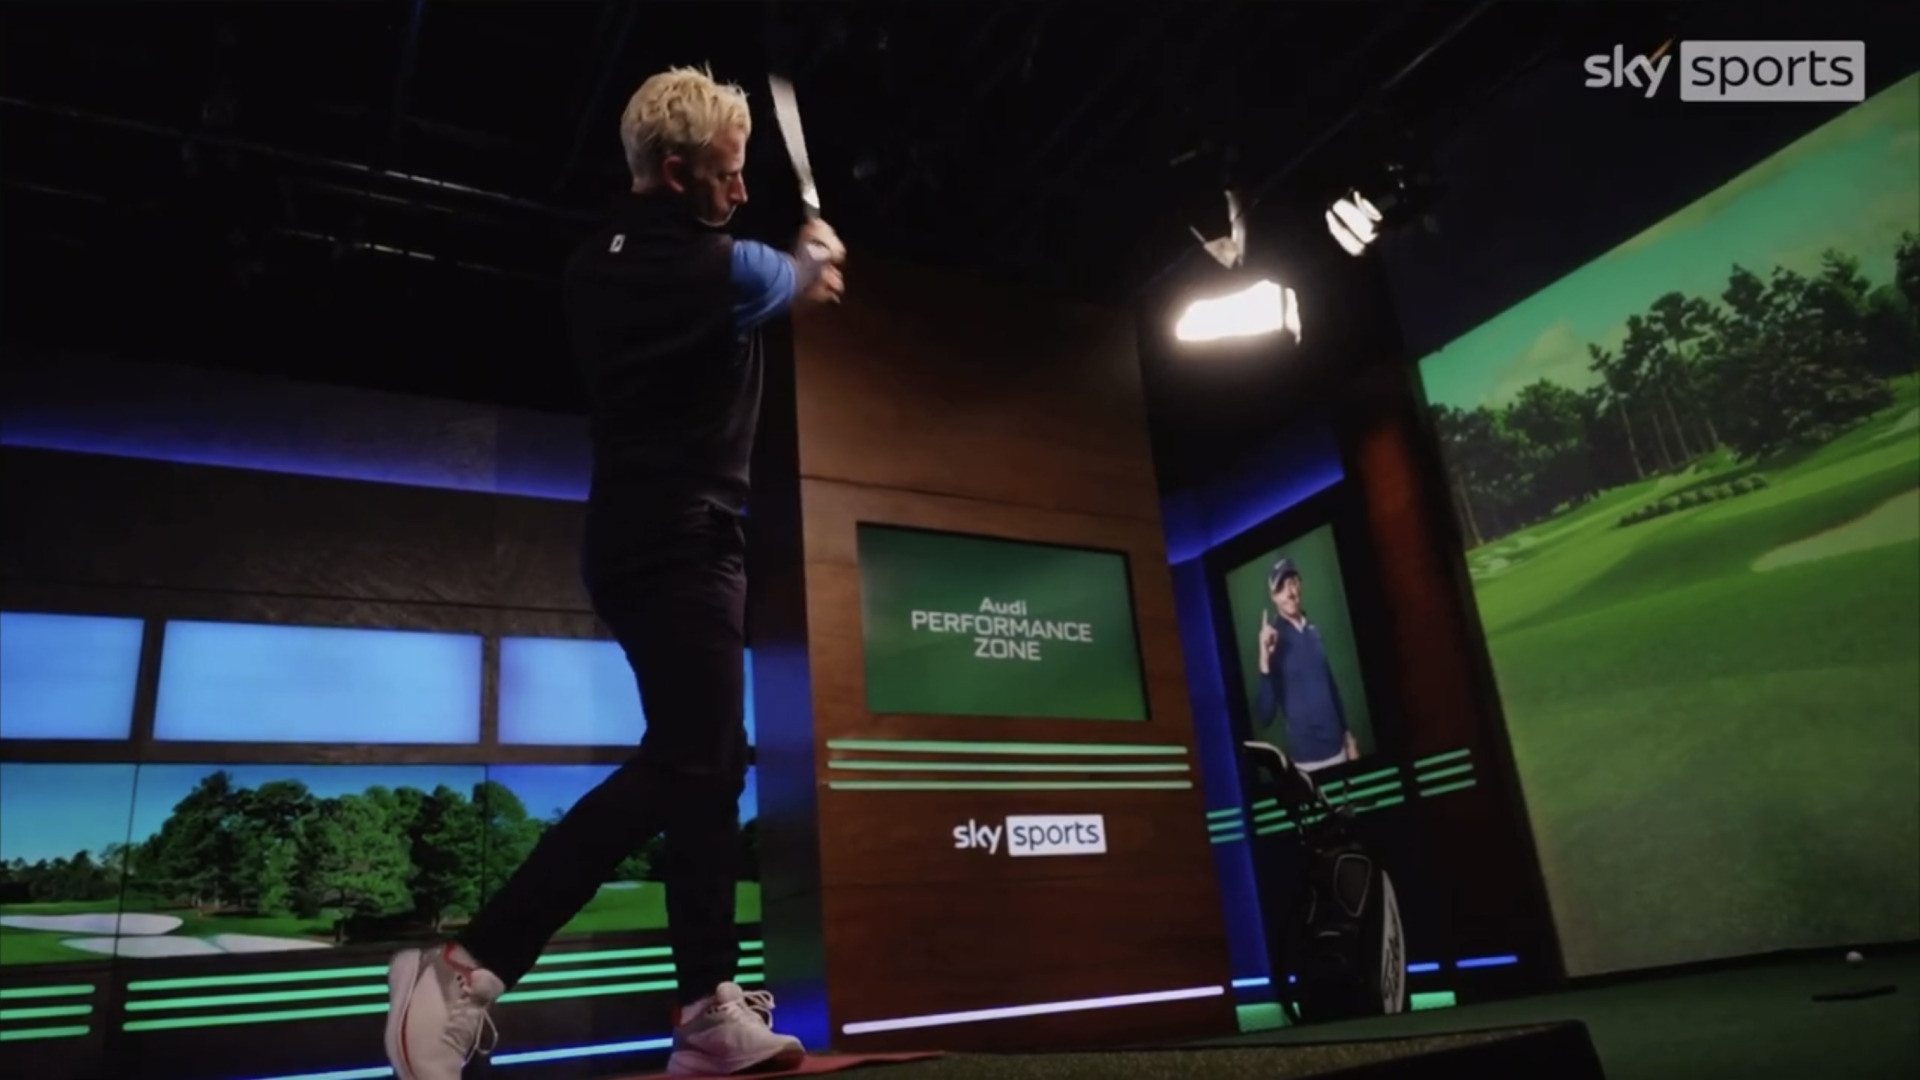 Jason Floyd - Audi Performance Zone - Sky Sports Golf